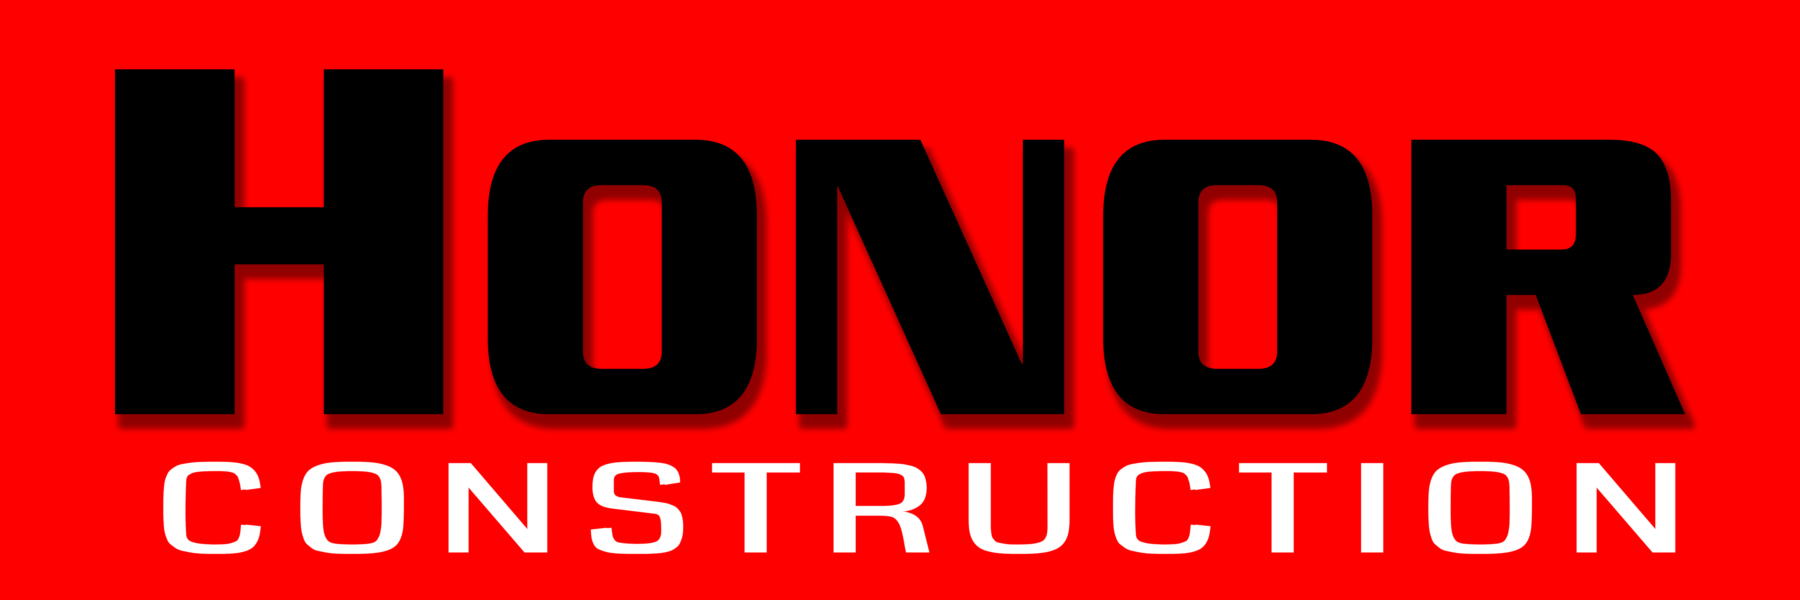 Honor Construction Inc.